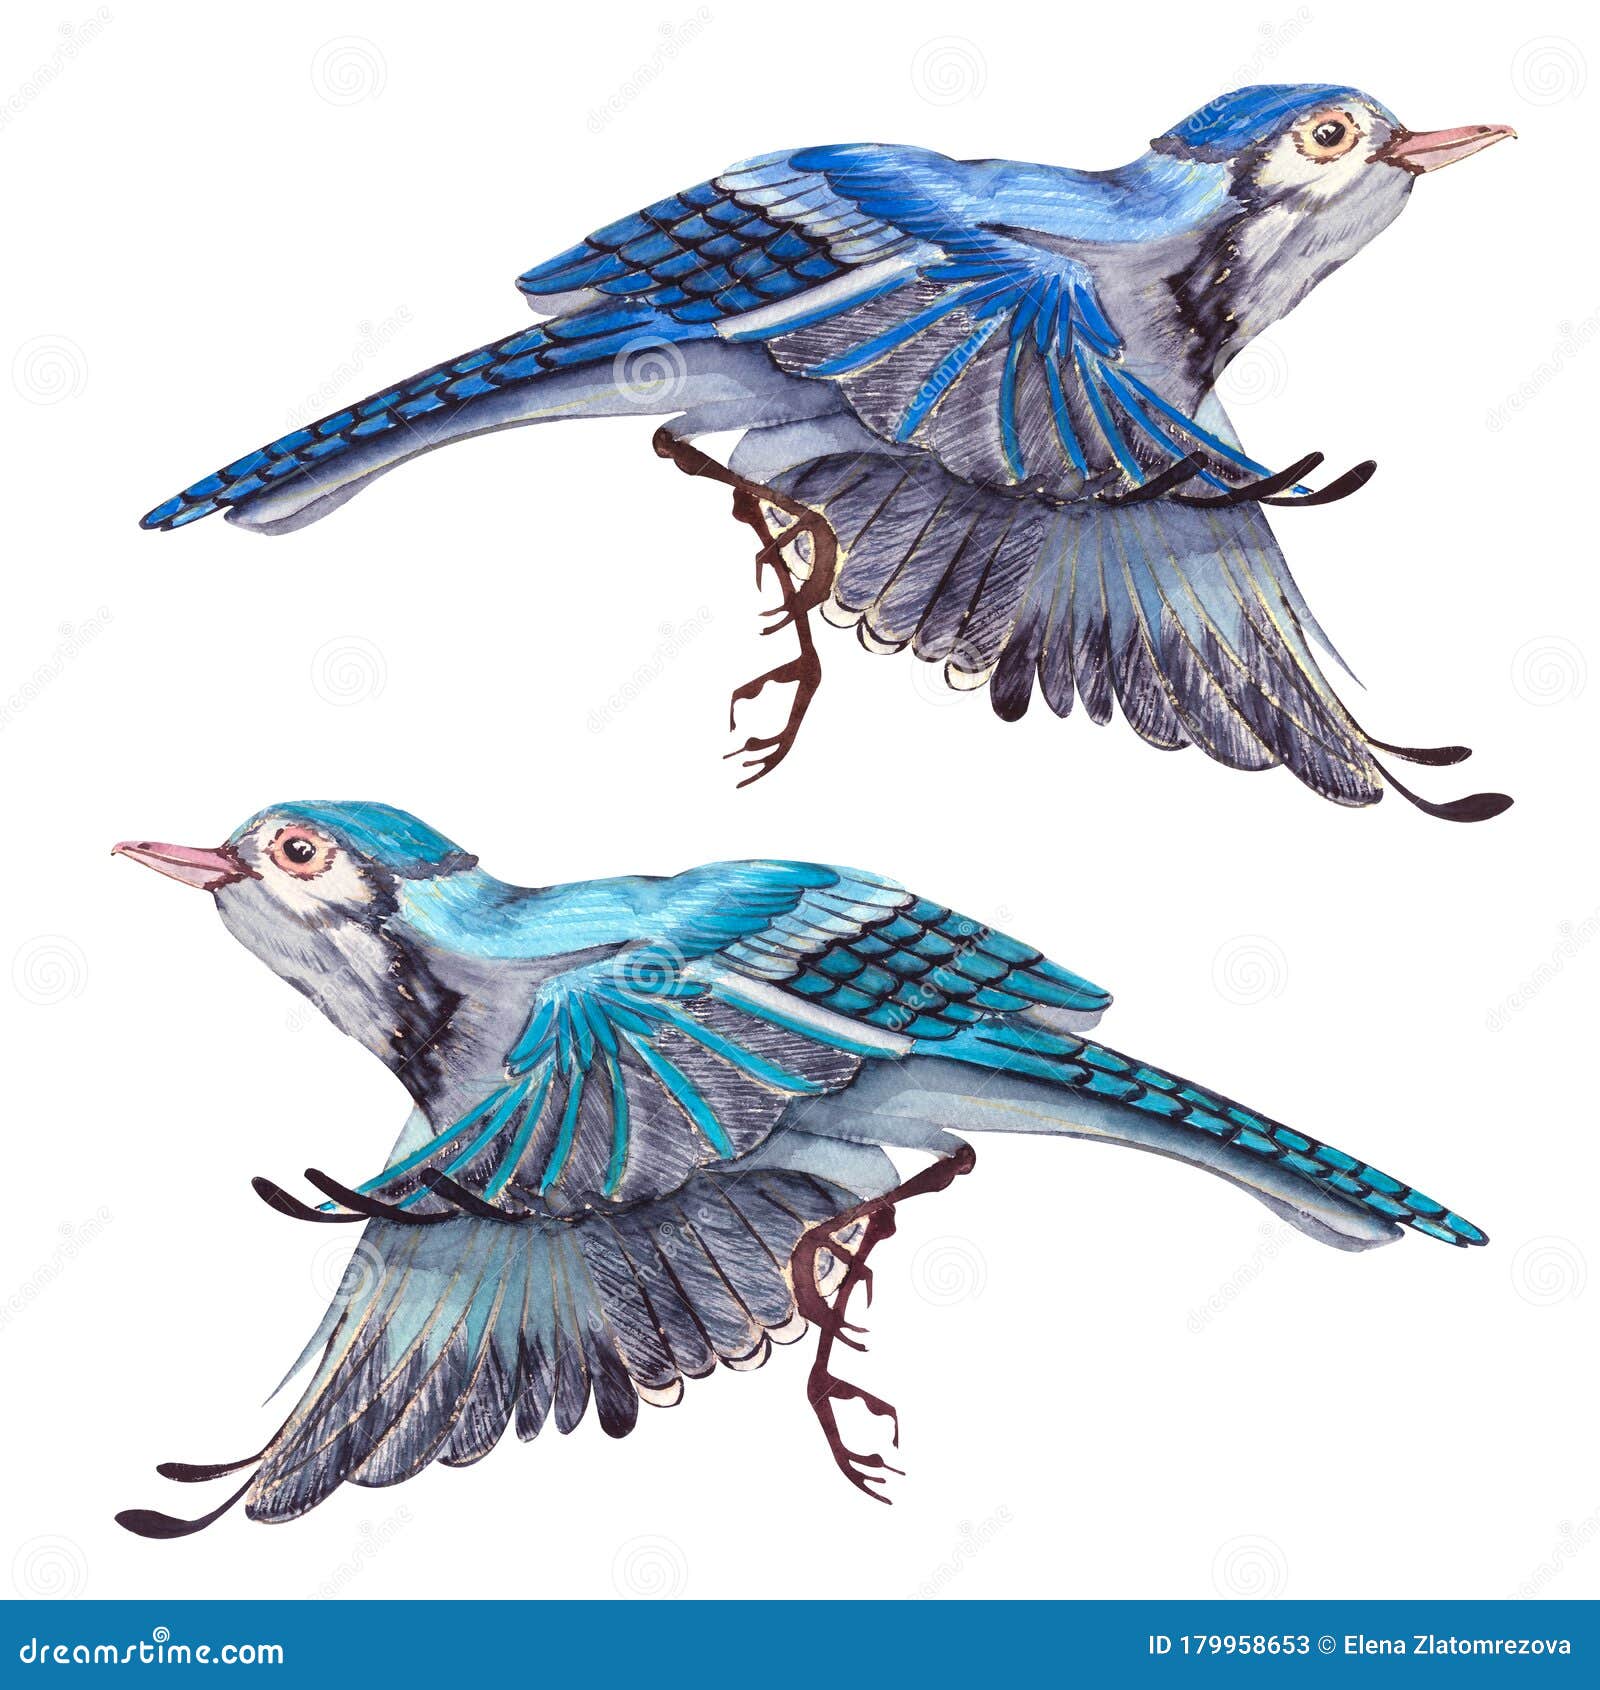 Blue Jay Bird Flies Watercolor Hand Drawn Illustration Blue Feathers Cute Bird Character Stock Illustration Illustration Of Animal Flying